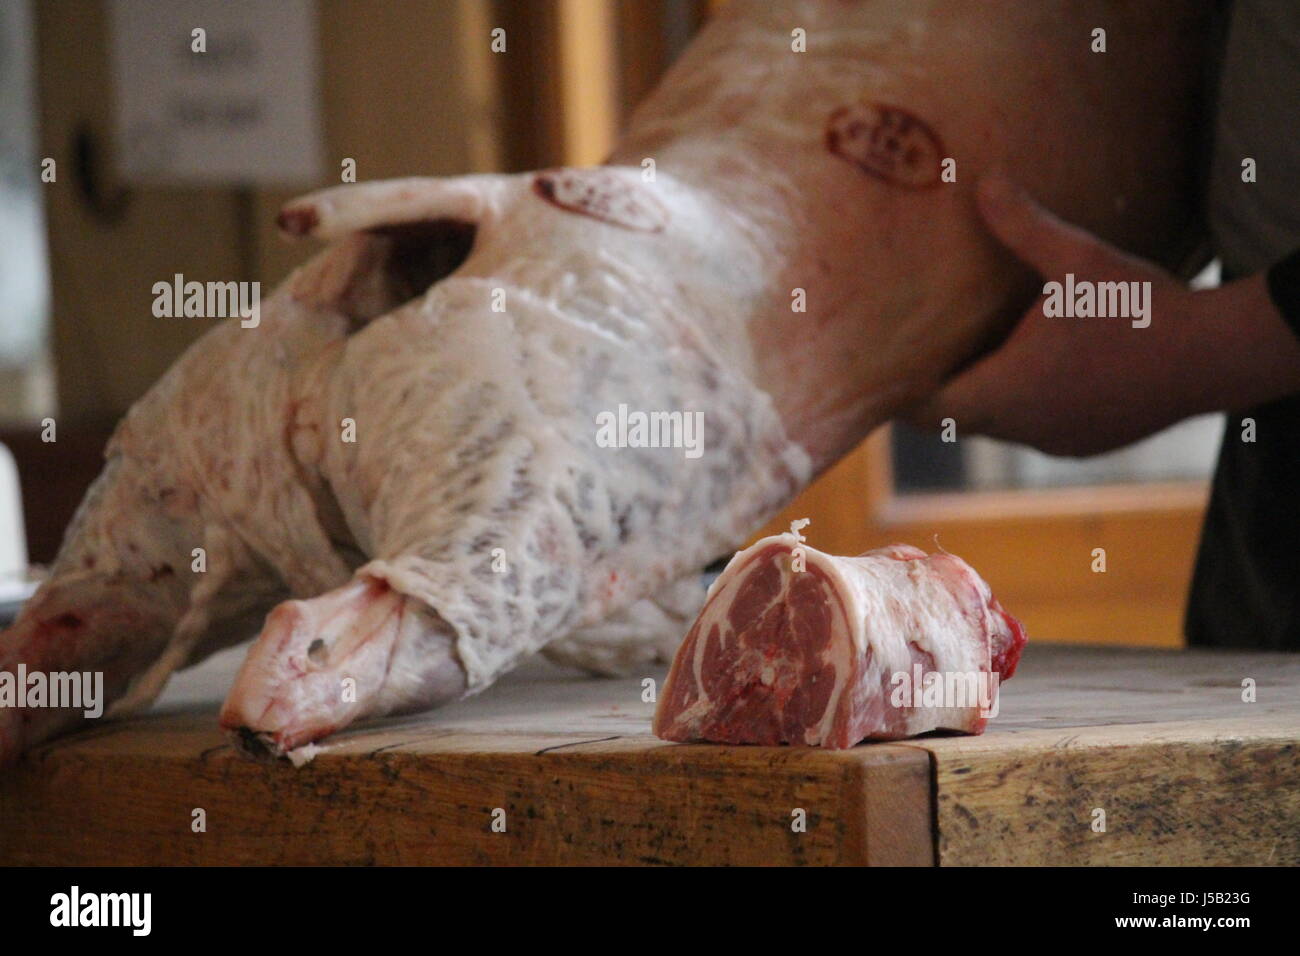 Butcher cutting up a lamb carcass on a butchers block Stock Photo